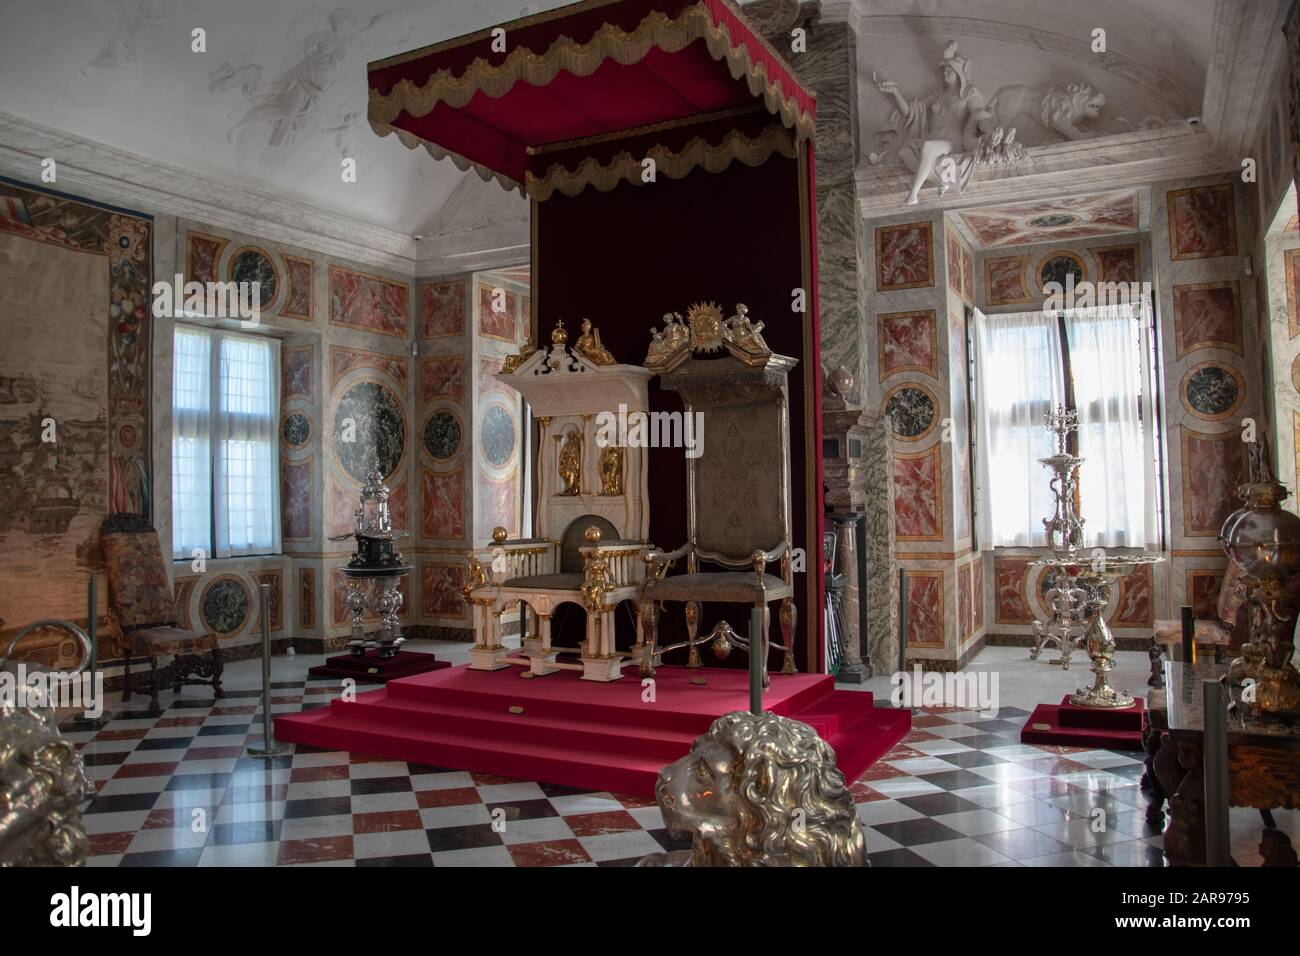 Der Thronsaal im Rittersaal. Schloss Rosenborg ist ein Renaissance-Schloss in Kopenhagen, Dänemark. Stockfoto